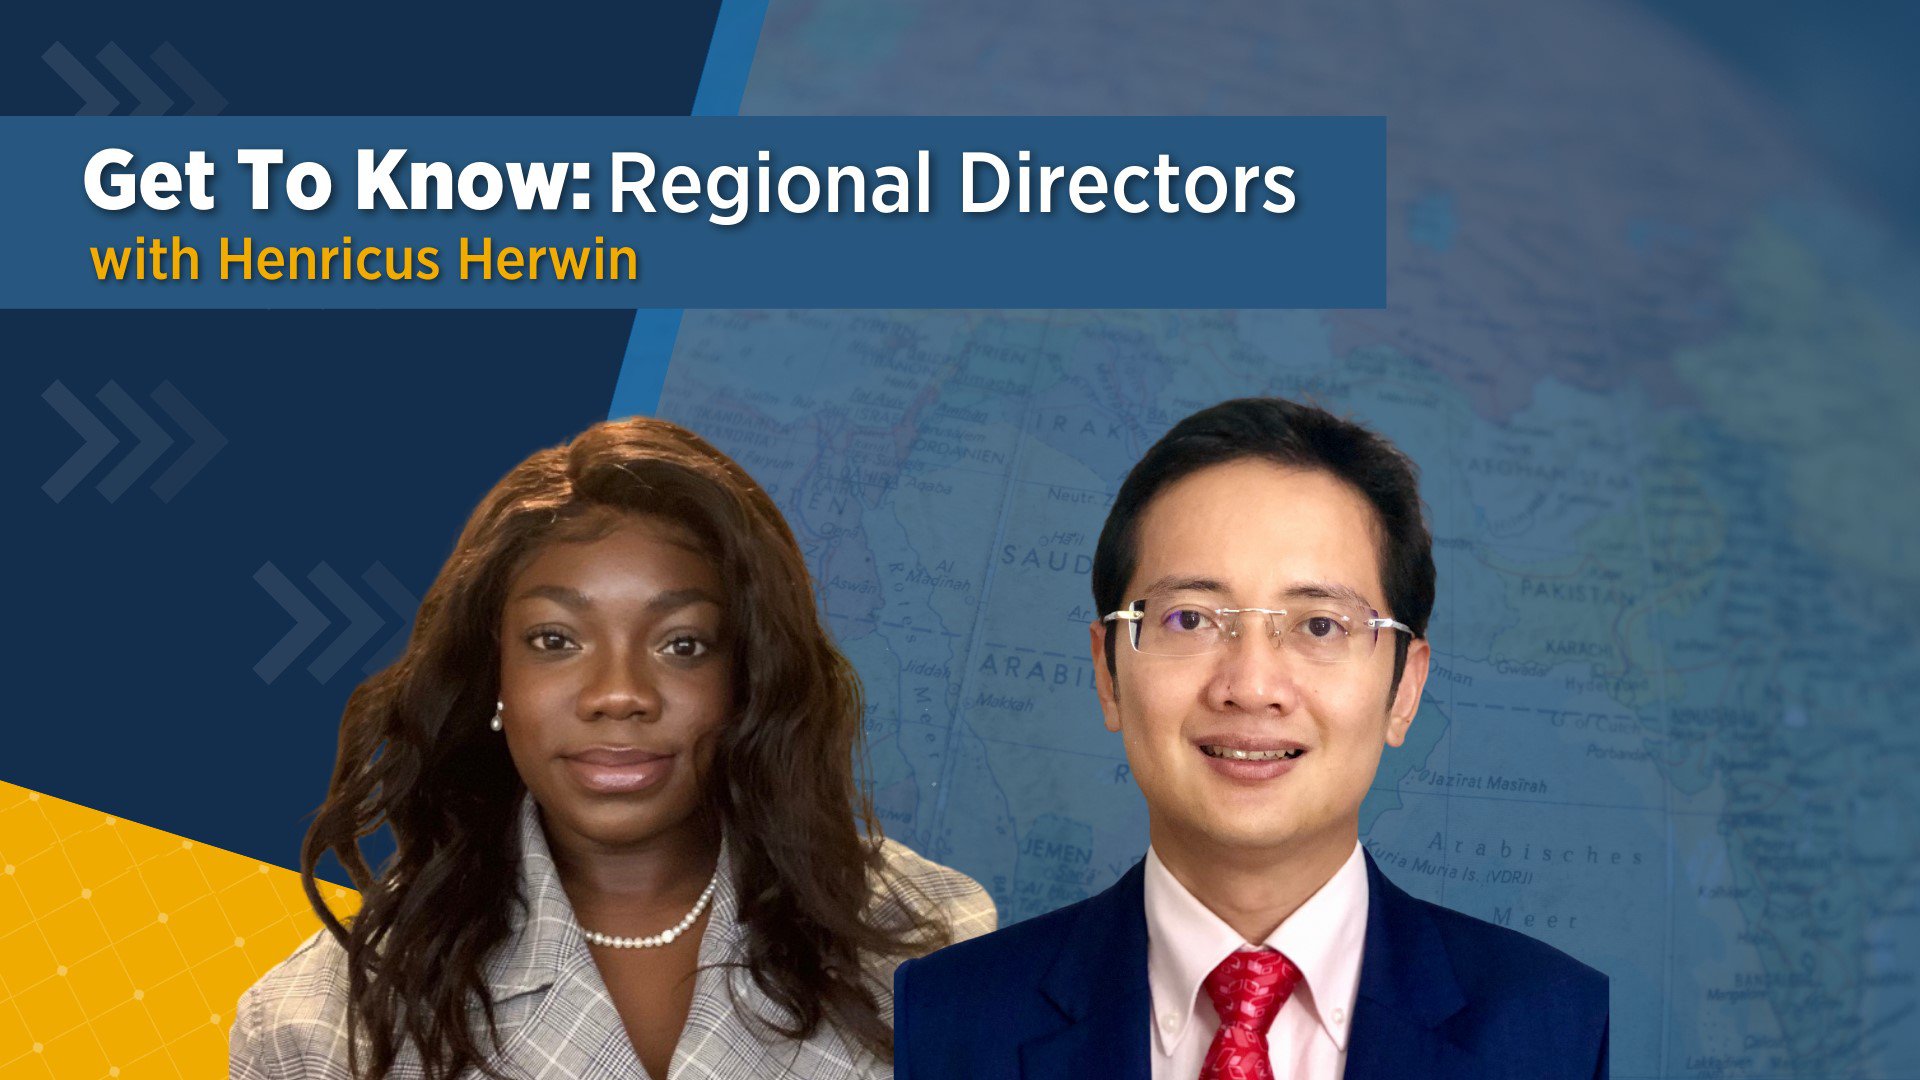 Get to Know: Regional Directors with Henricus Herwin